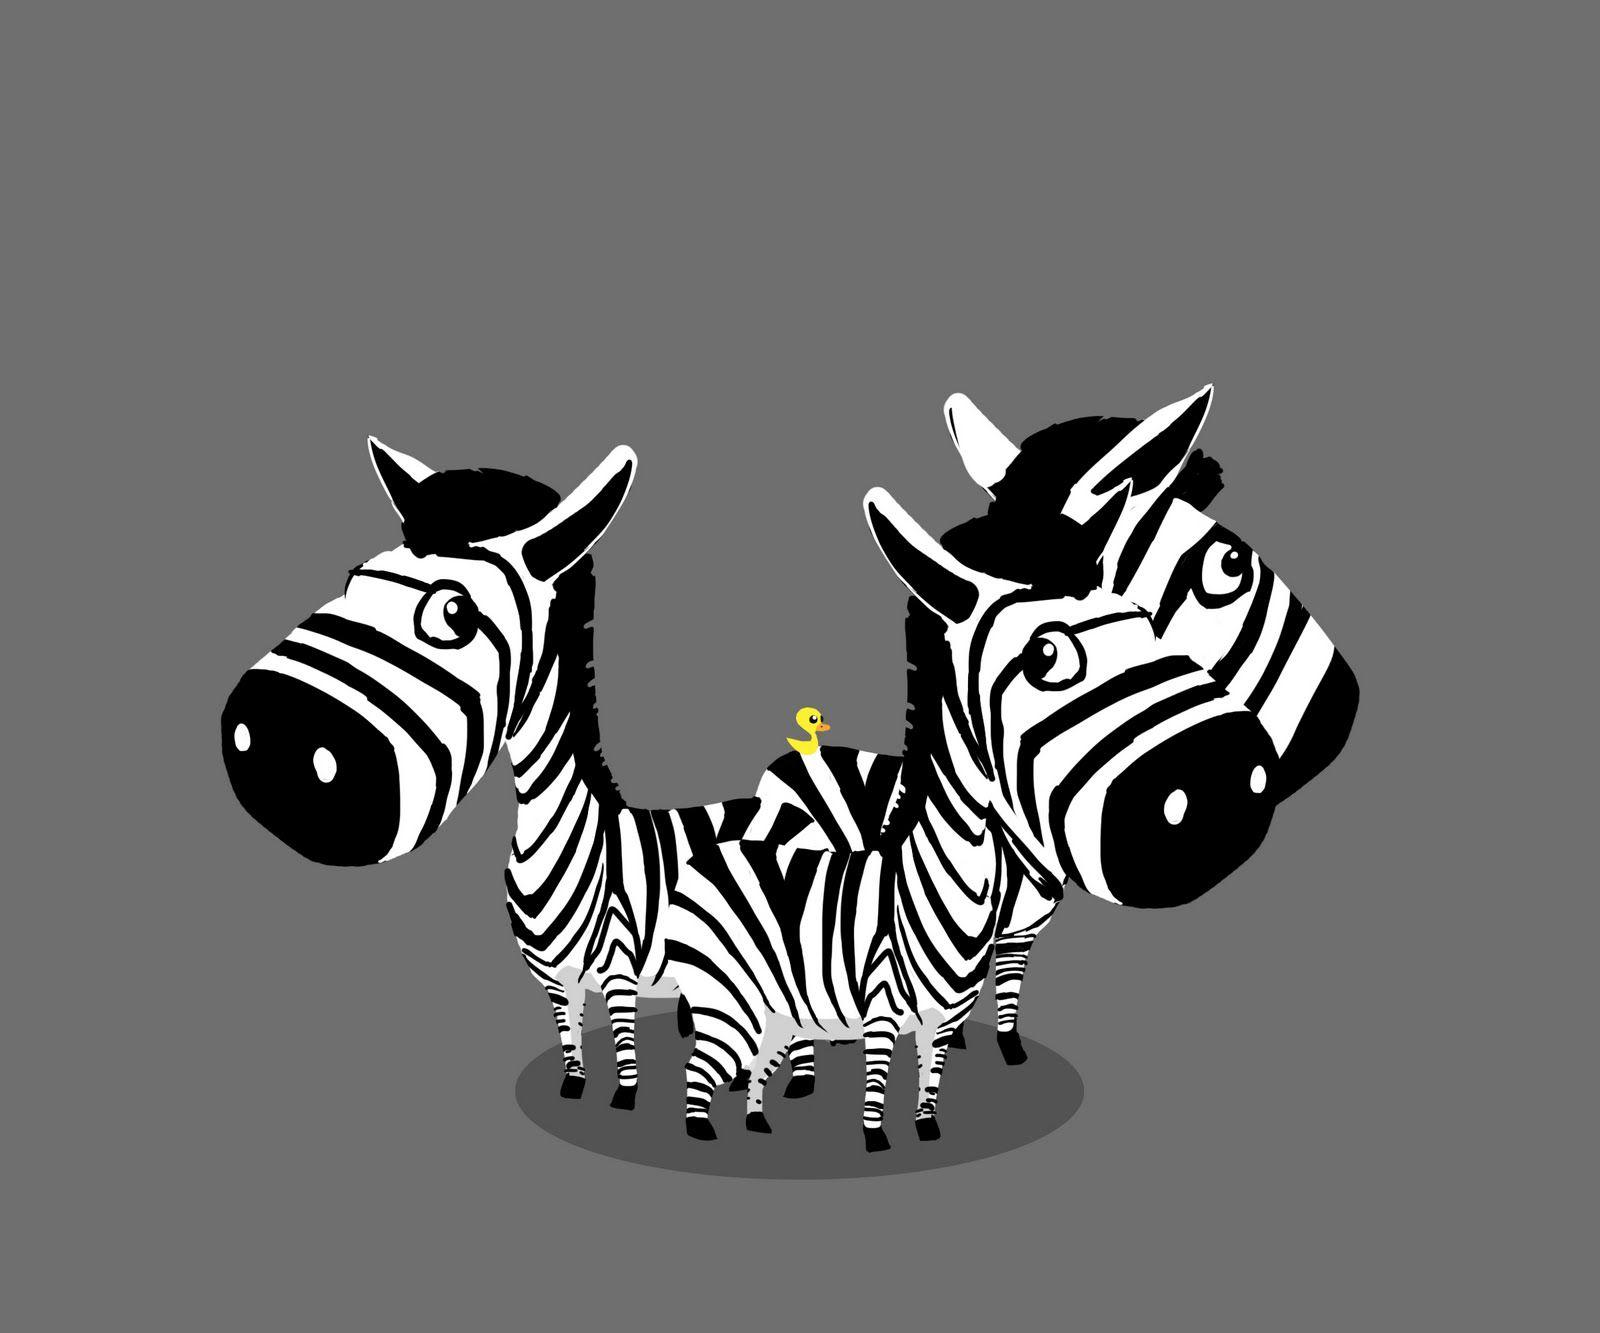 Free Animated Zebra Picture, Download Free Clip Art, Free Clip Art